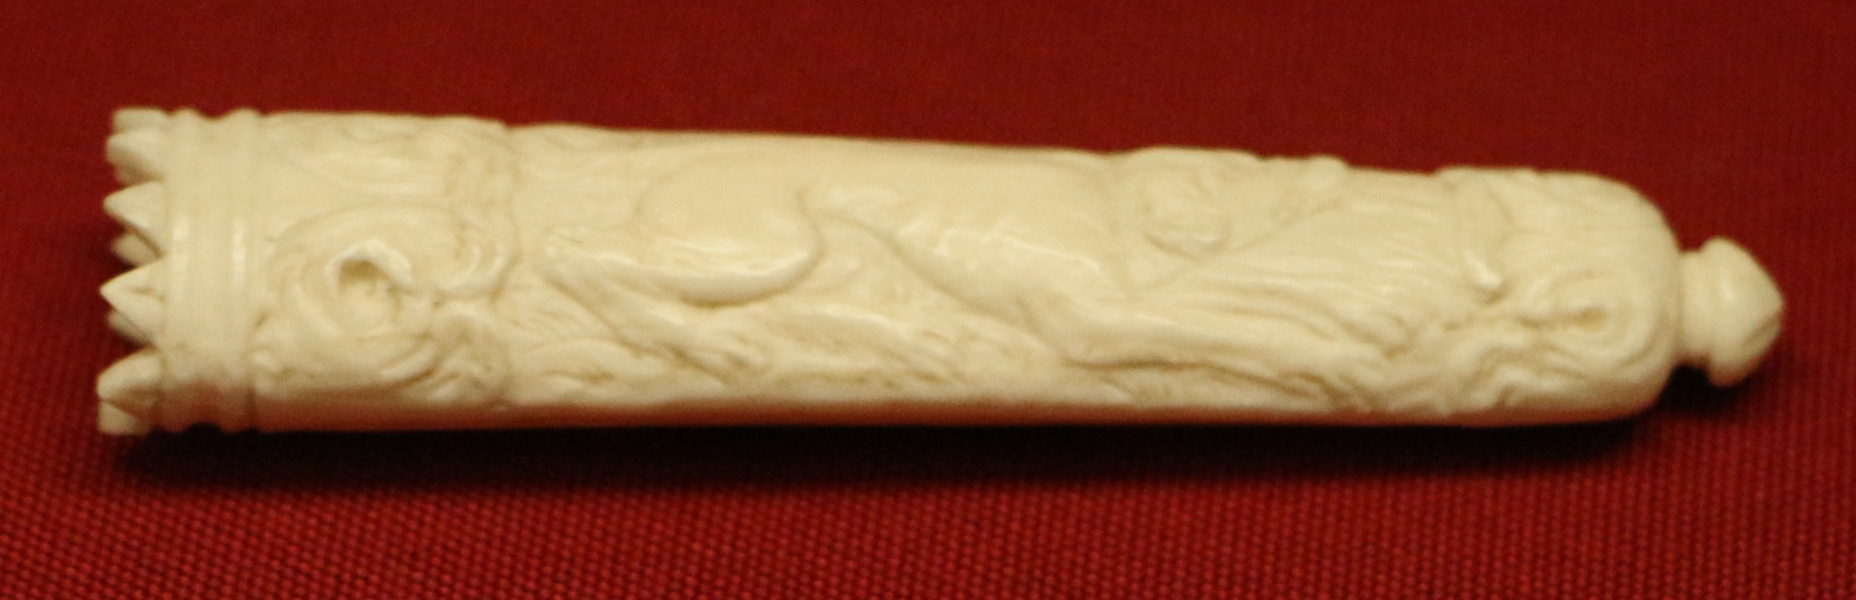 Francia (dieppe) o fiandre, agoraio a forma di faretra, avorio, xviii secolo - Sailko